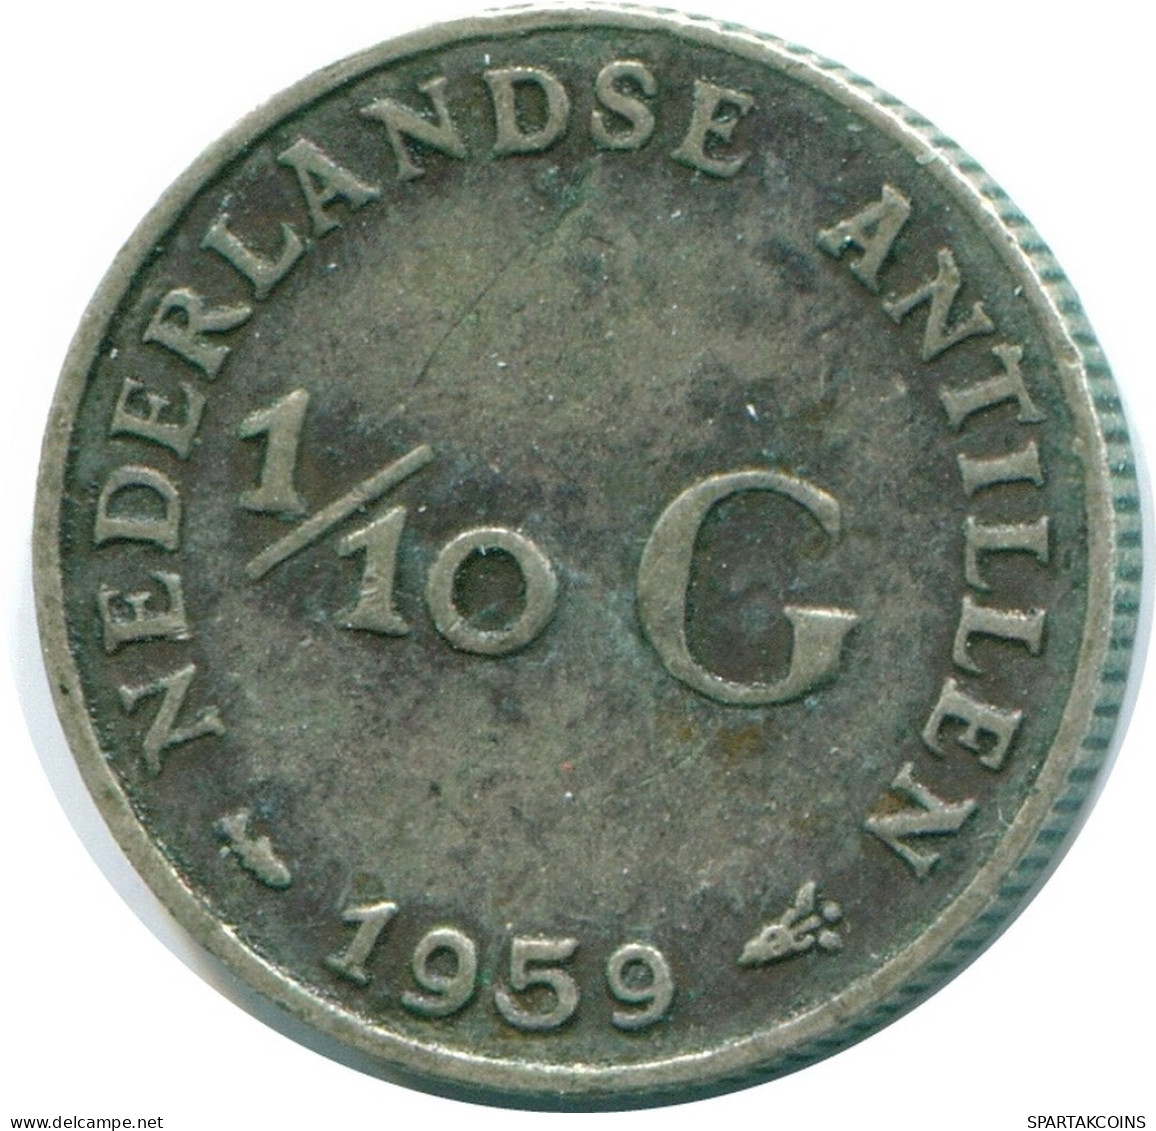 1/10 GULDEN 1959 NETHERLANDS ANTILLES SILVER Colonial Coin #NL12217.3.U.A - Netherlands Antilles